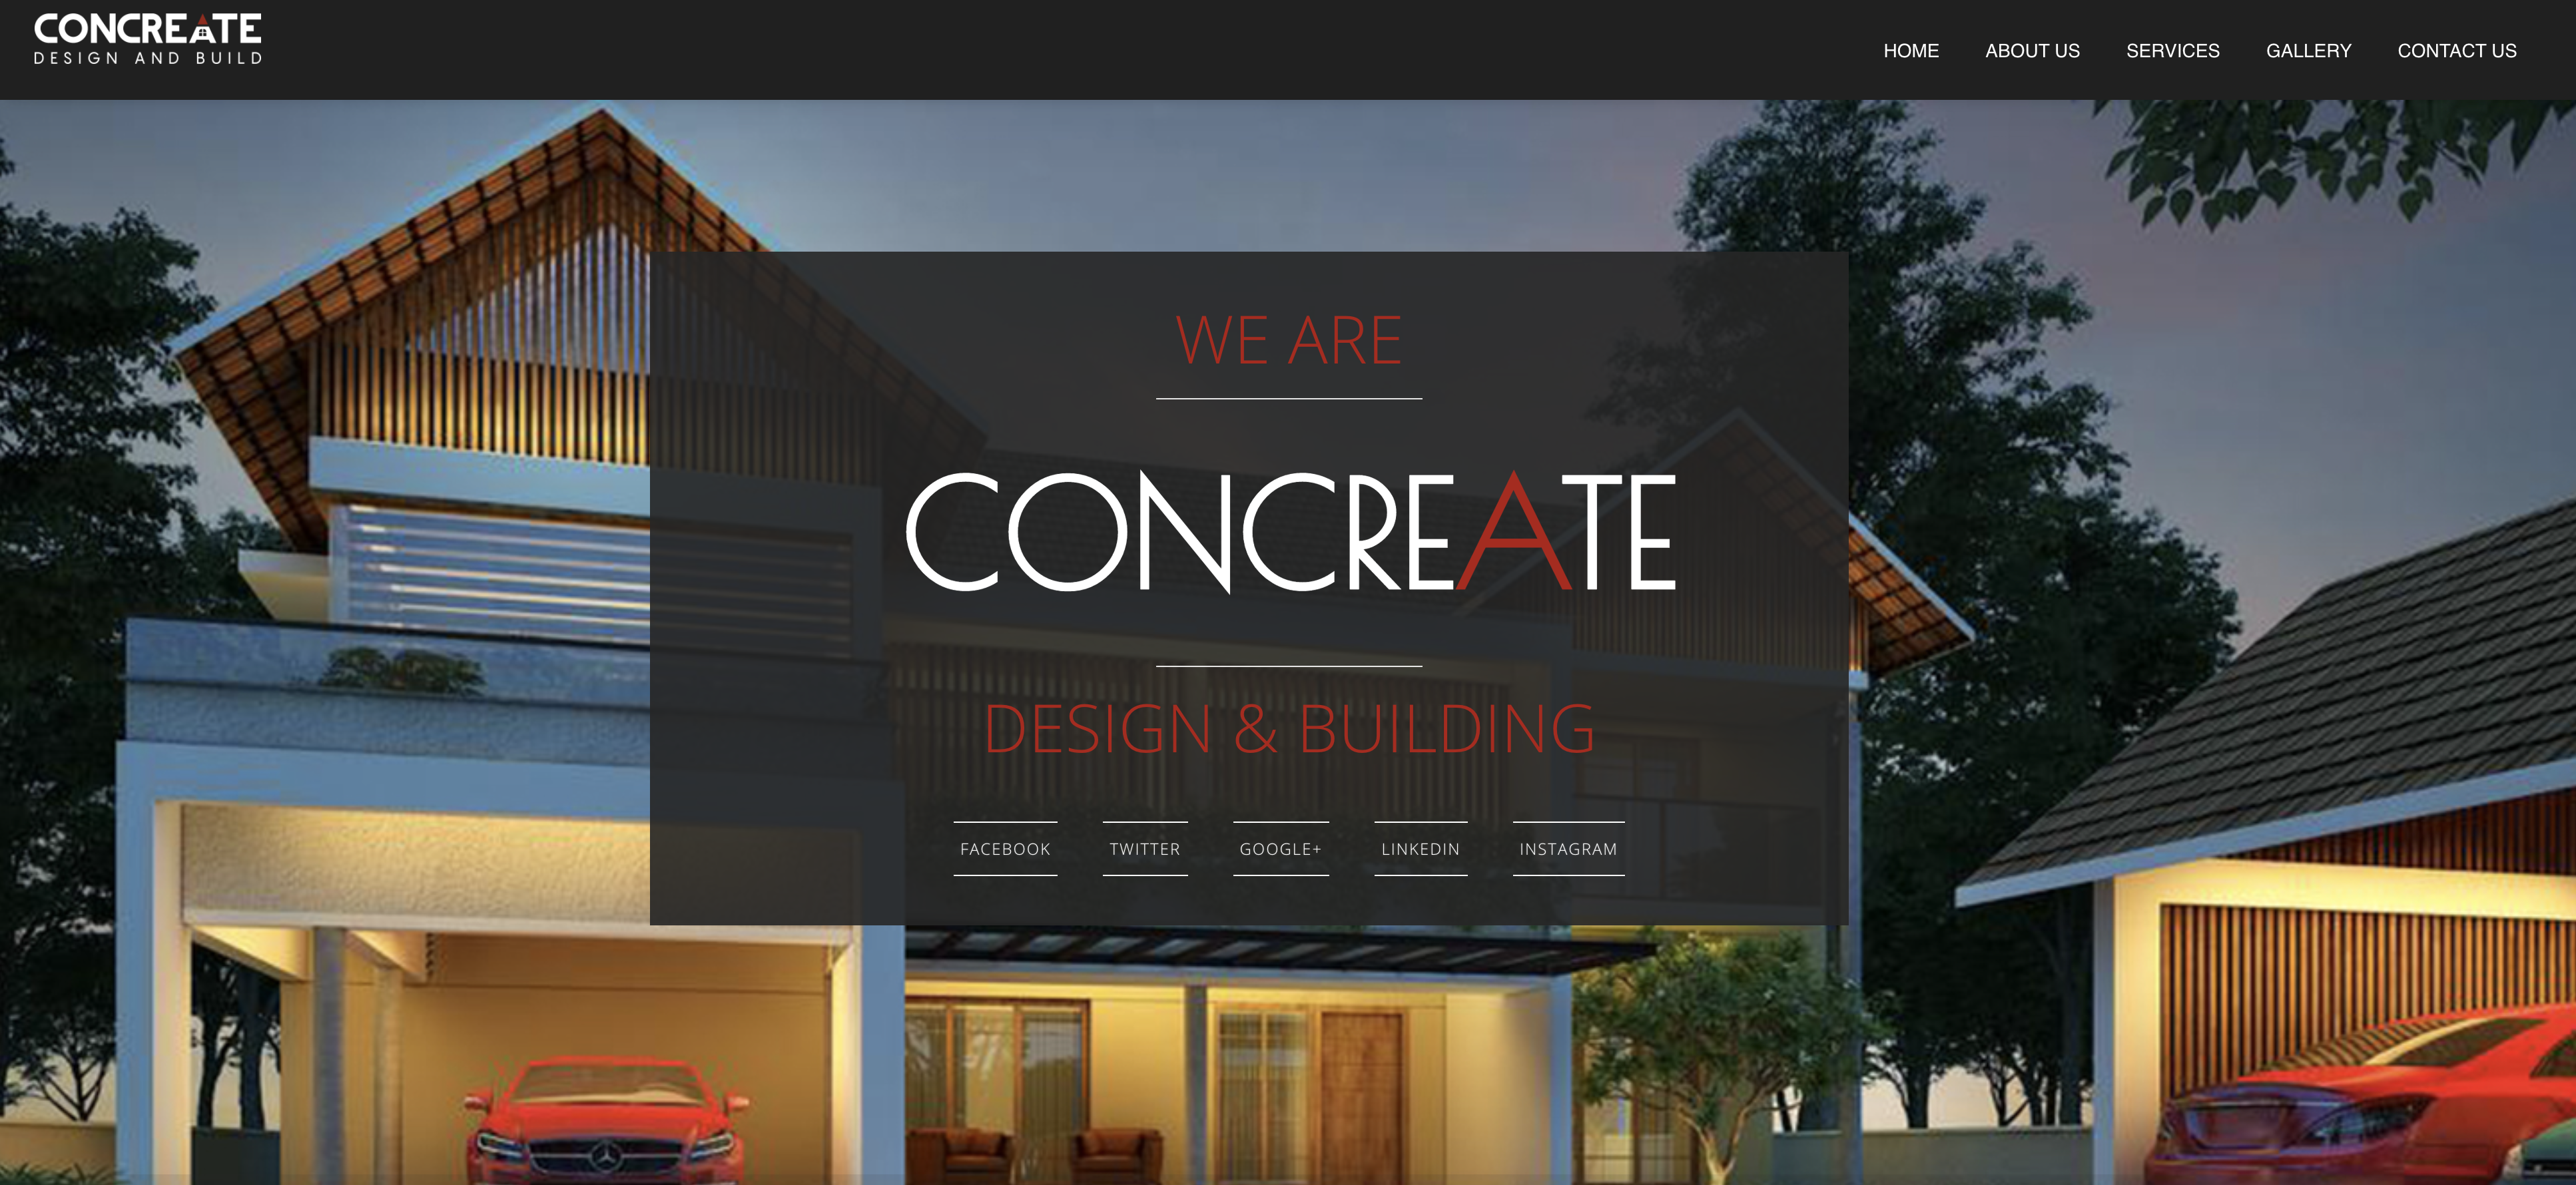 website designing of concreate.com